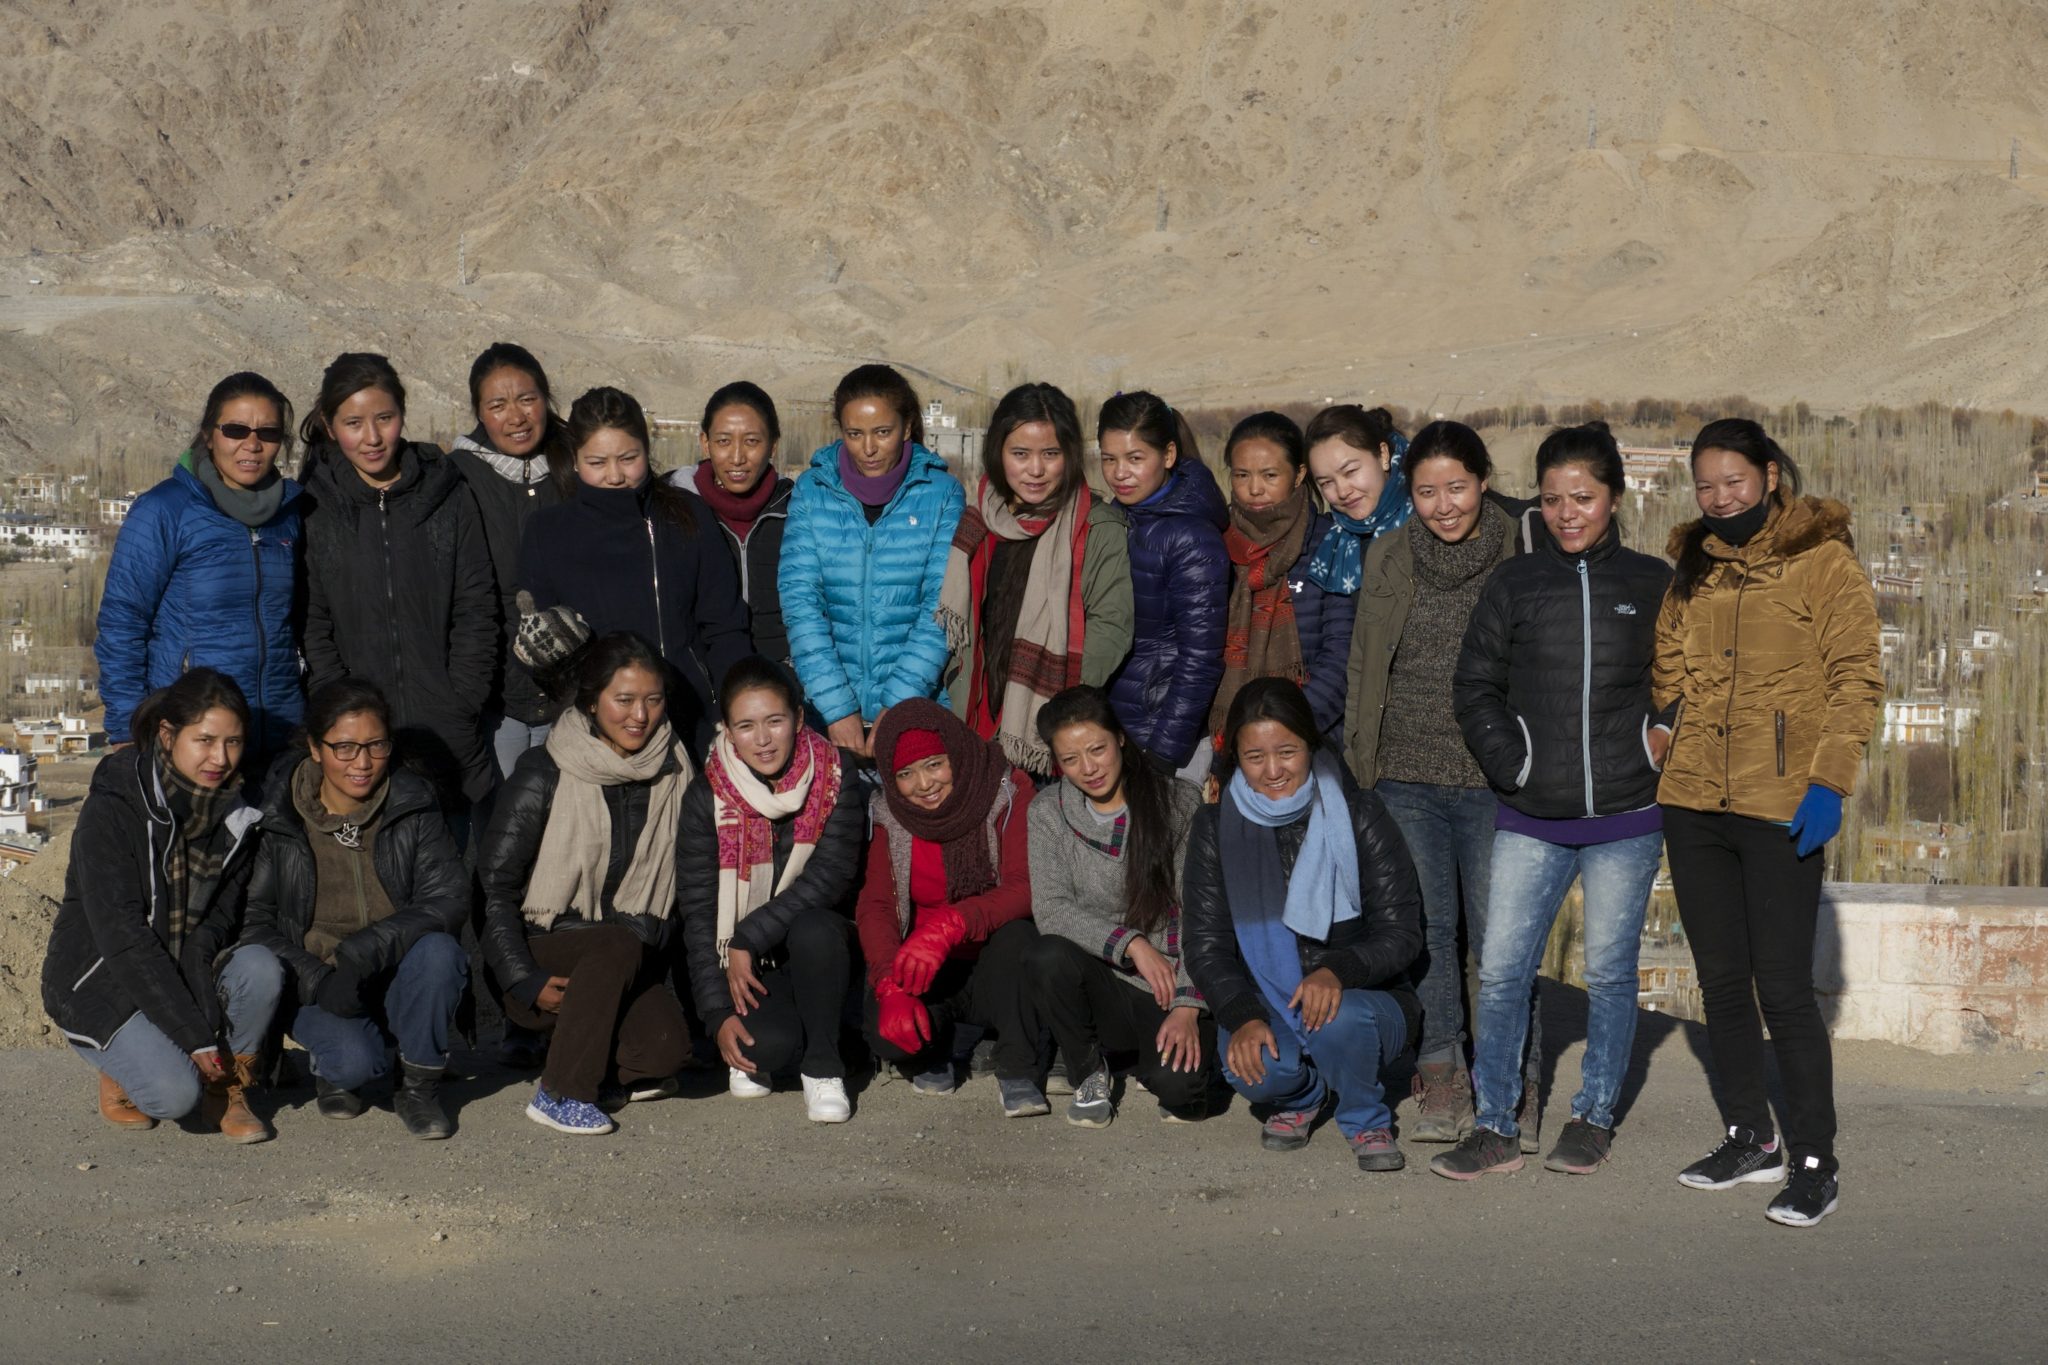 Ladakhi Women’s Travel Company